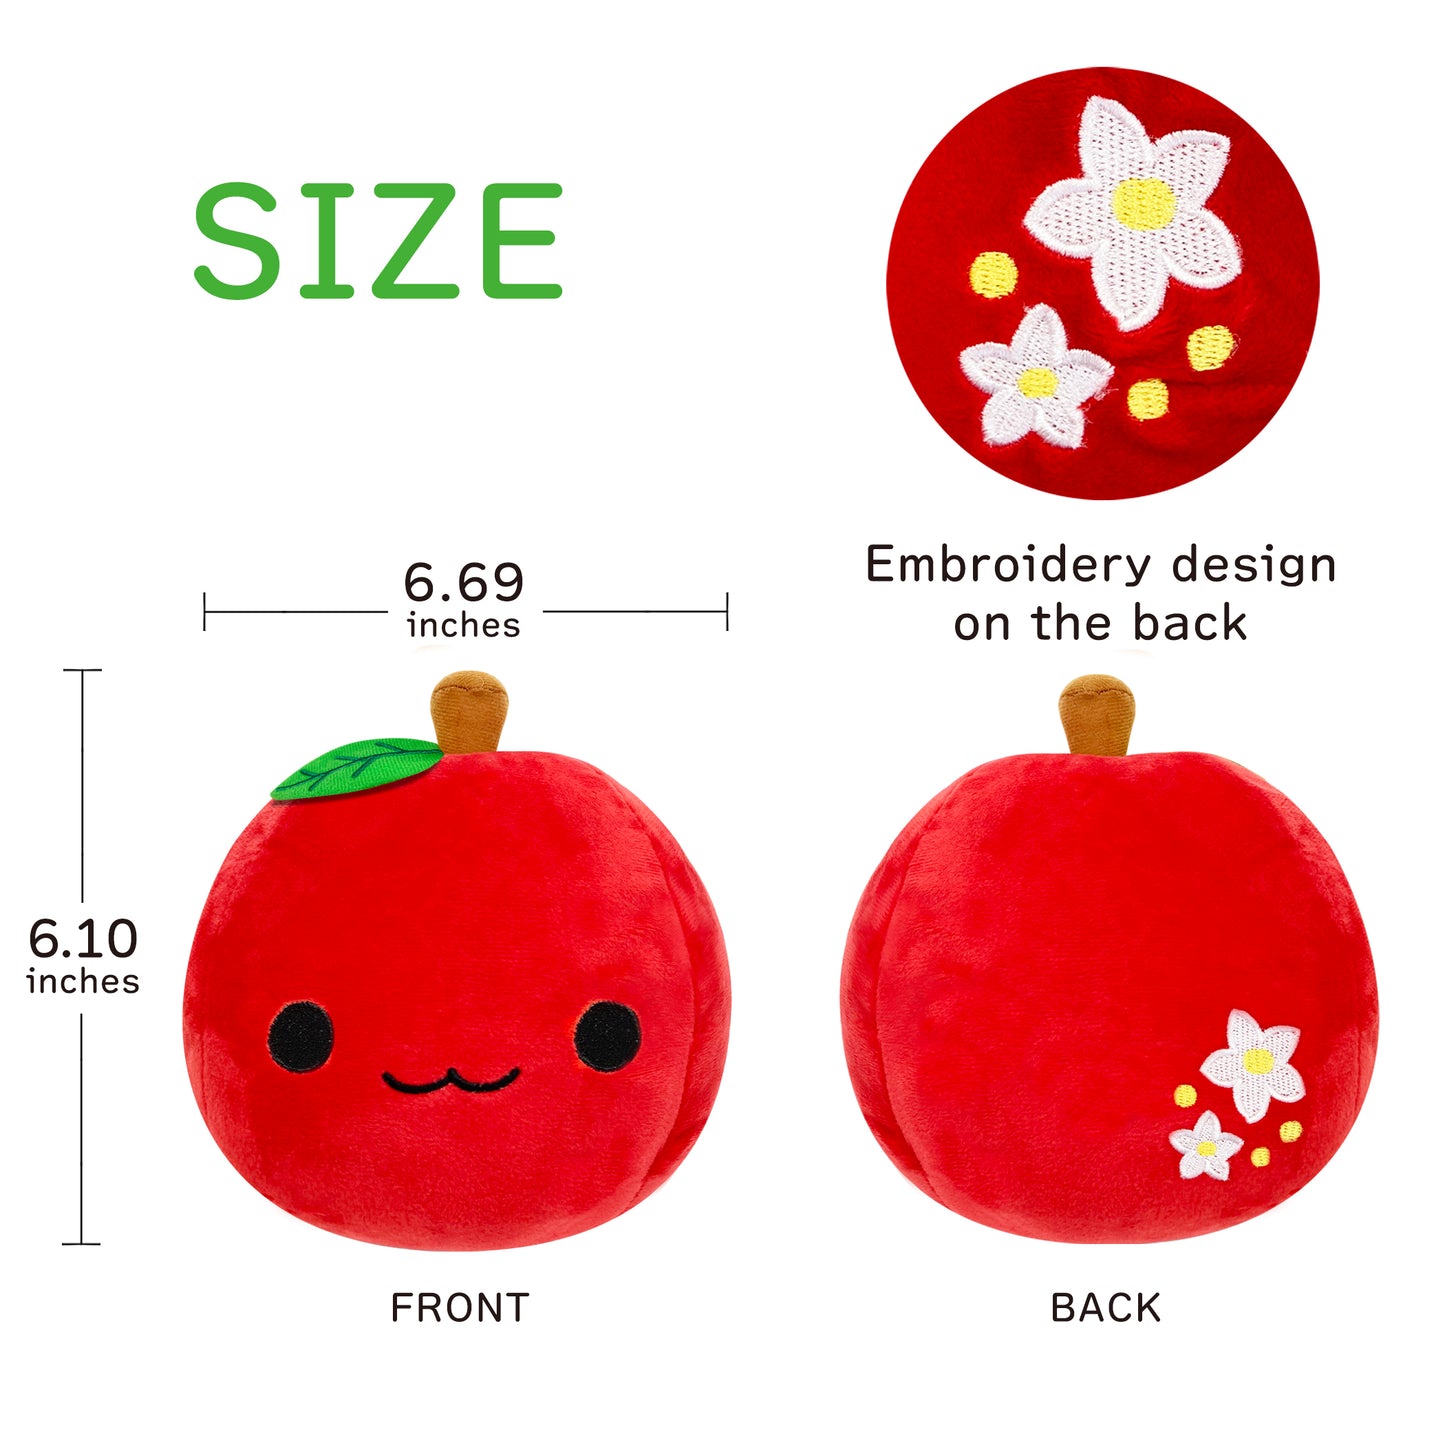 Size of Apple Fruit Stuffed Toy Ringochan Red